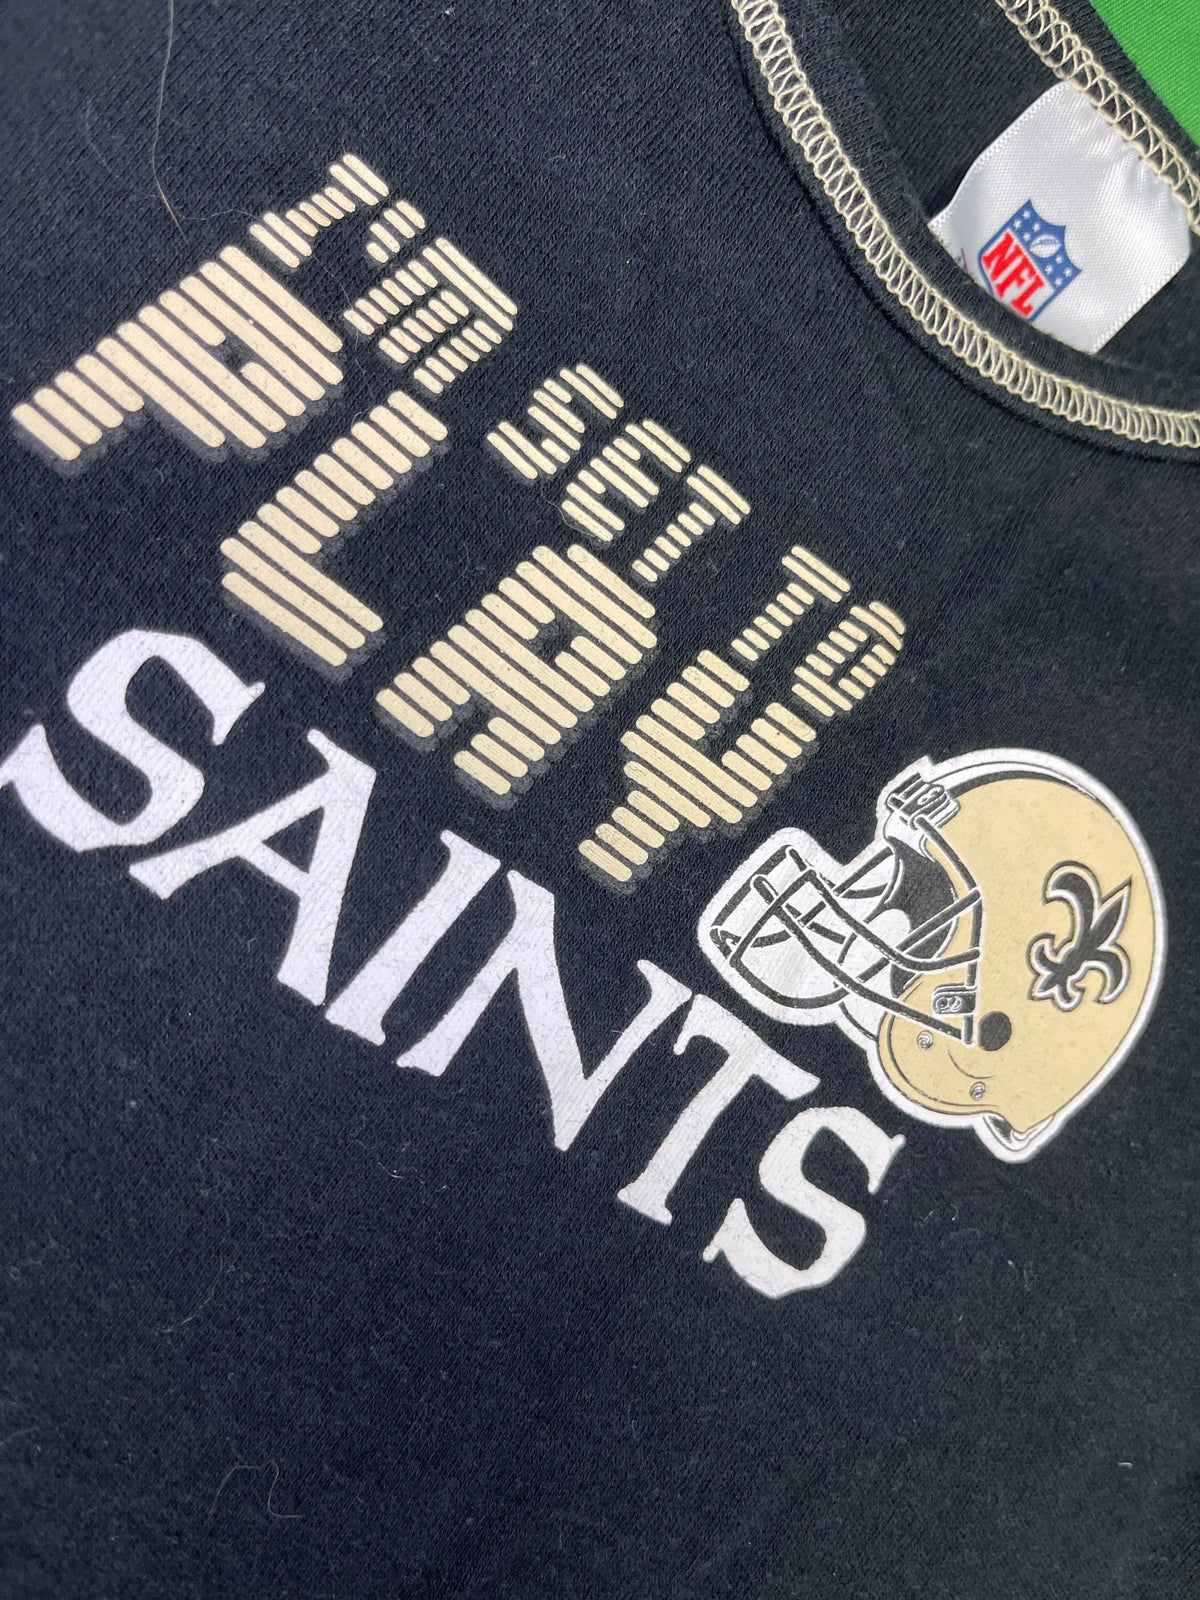 NFL New Orleans Saints 'I'm Set to Play' Bodysuit Infant 3-6 Months